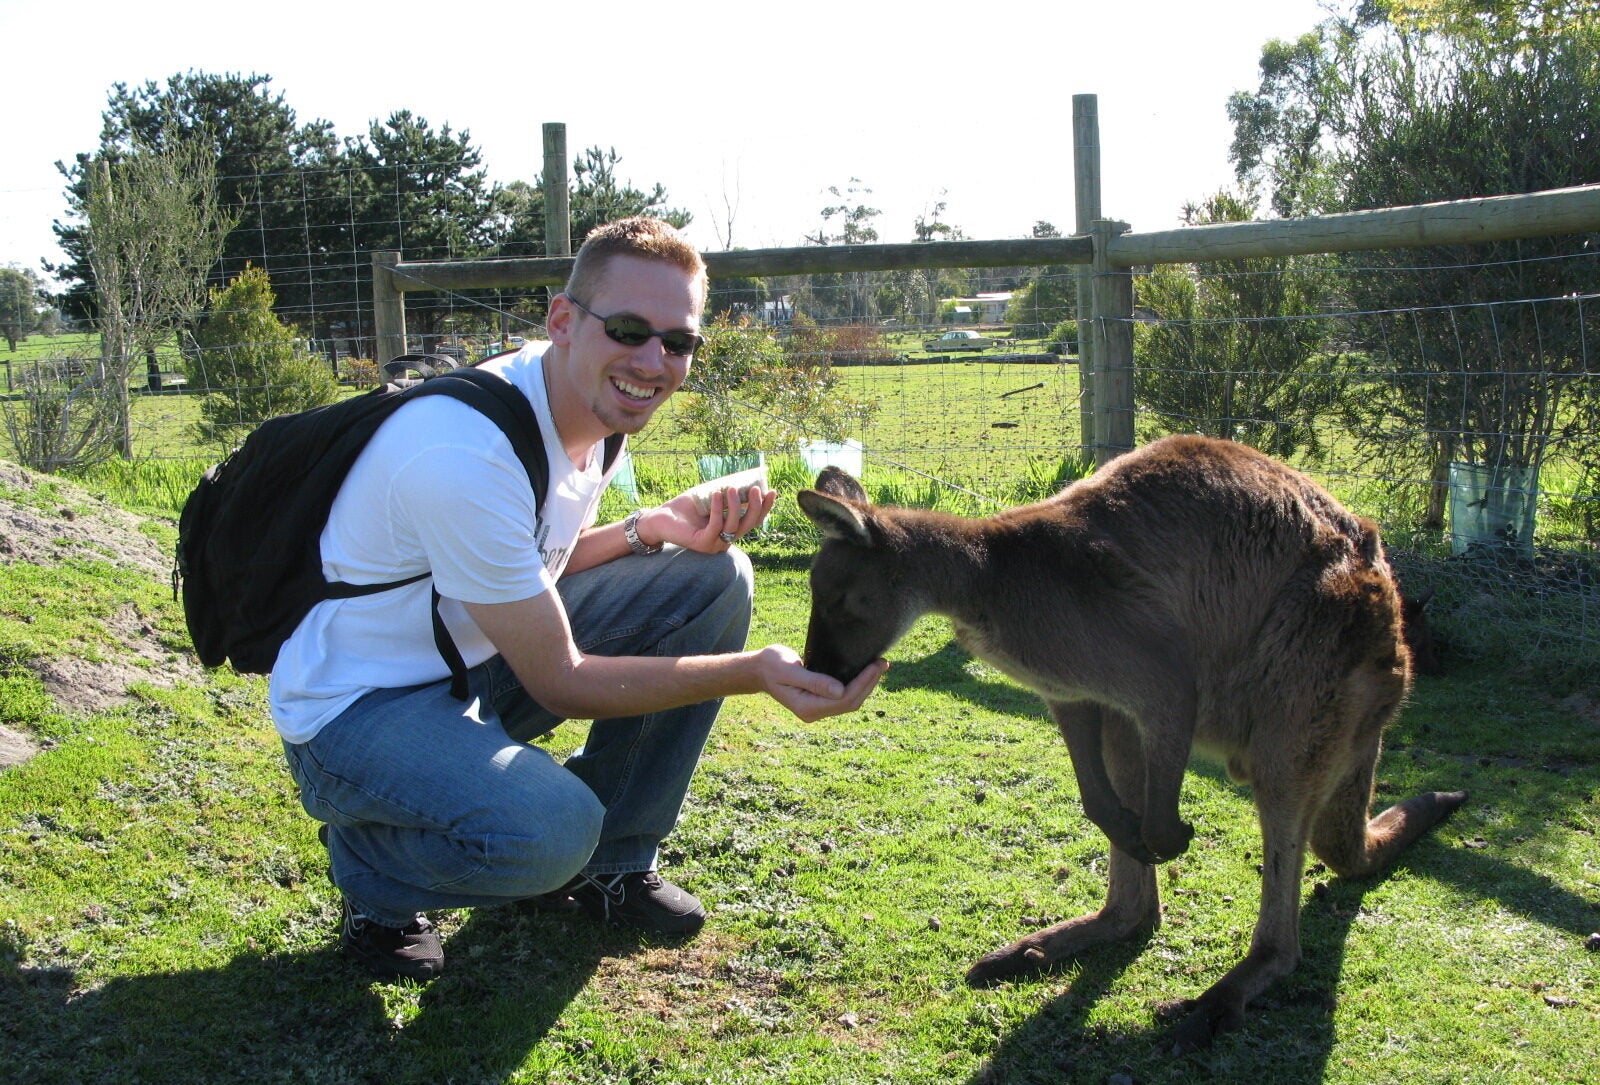 LVC student poses with kangaroo in Australia